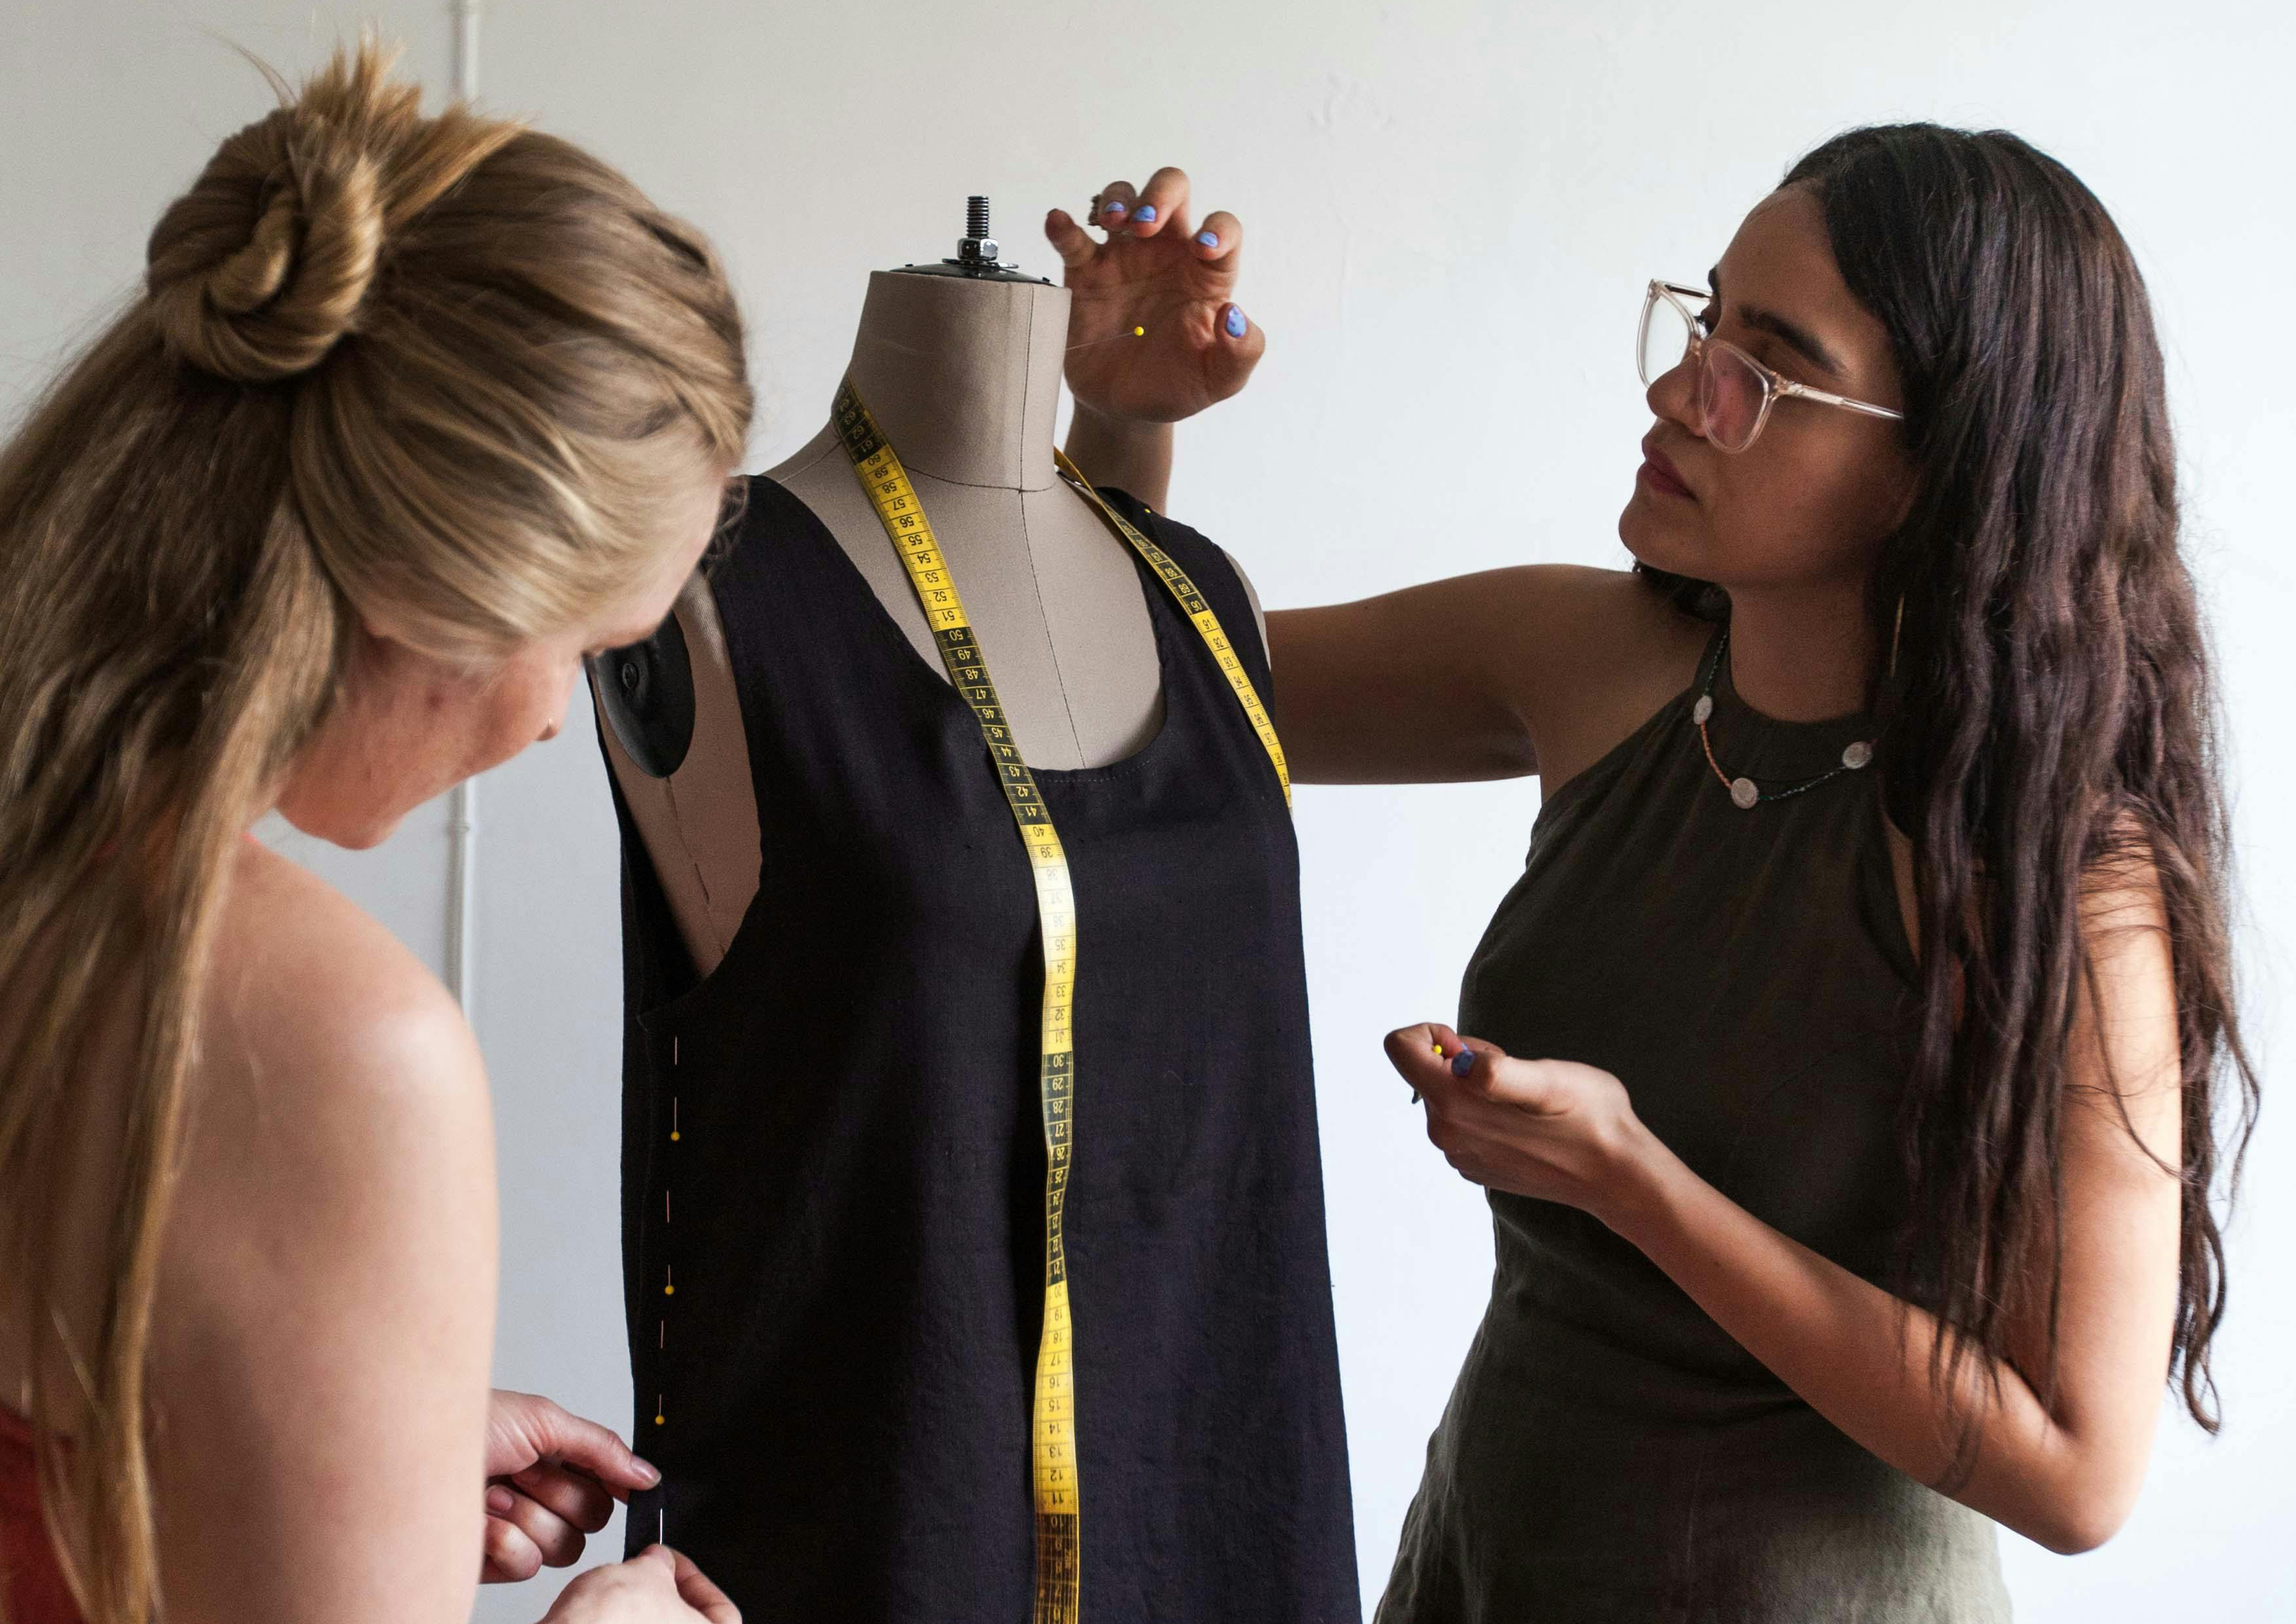 Crafting Elegance: A Case Study on Dress Making